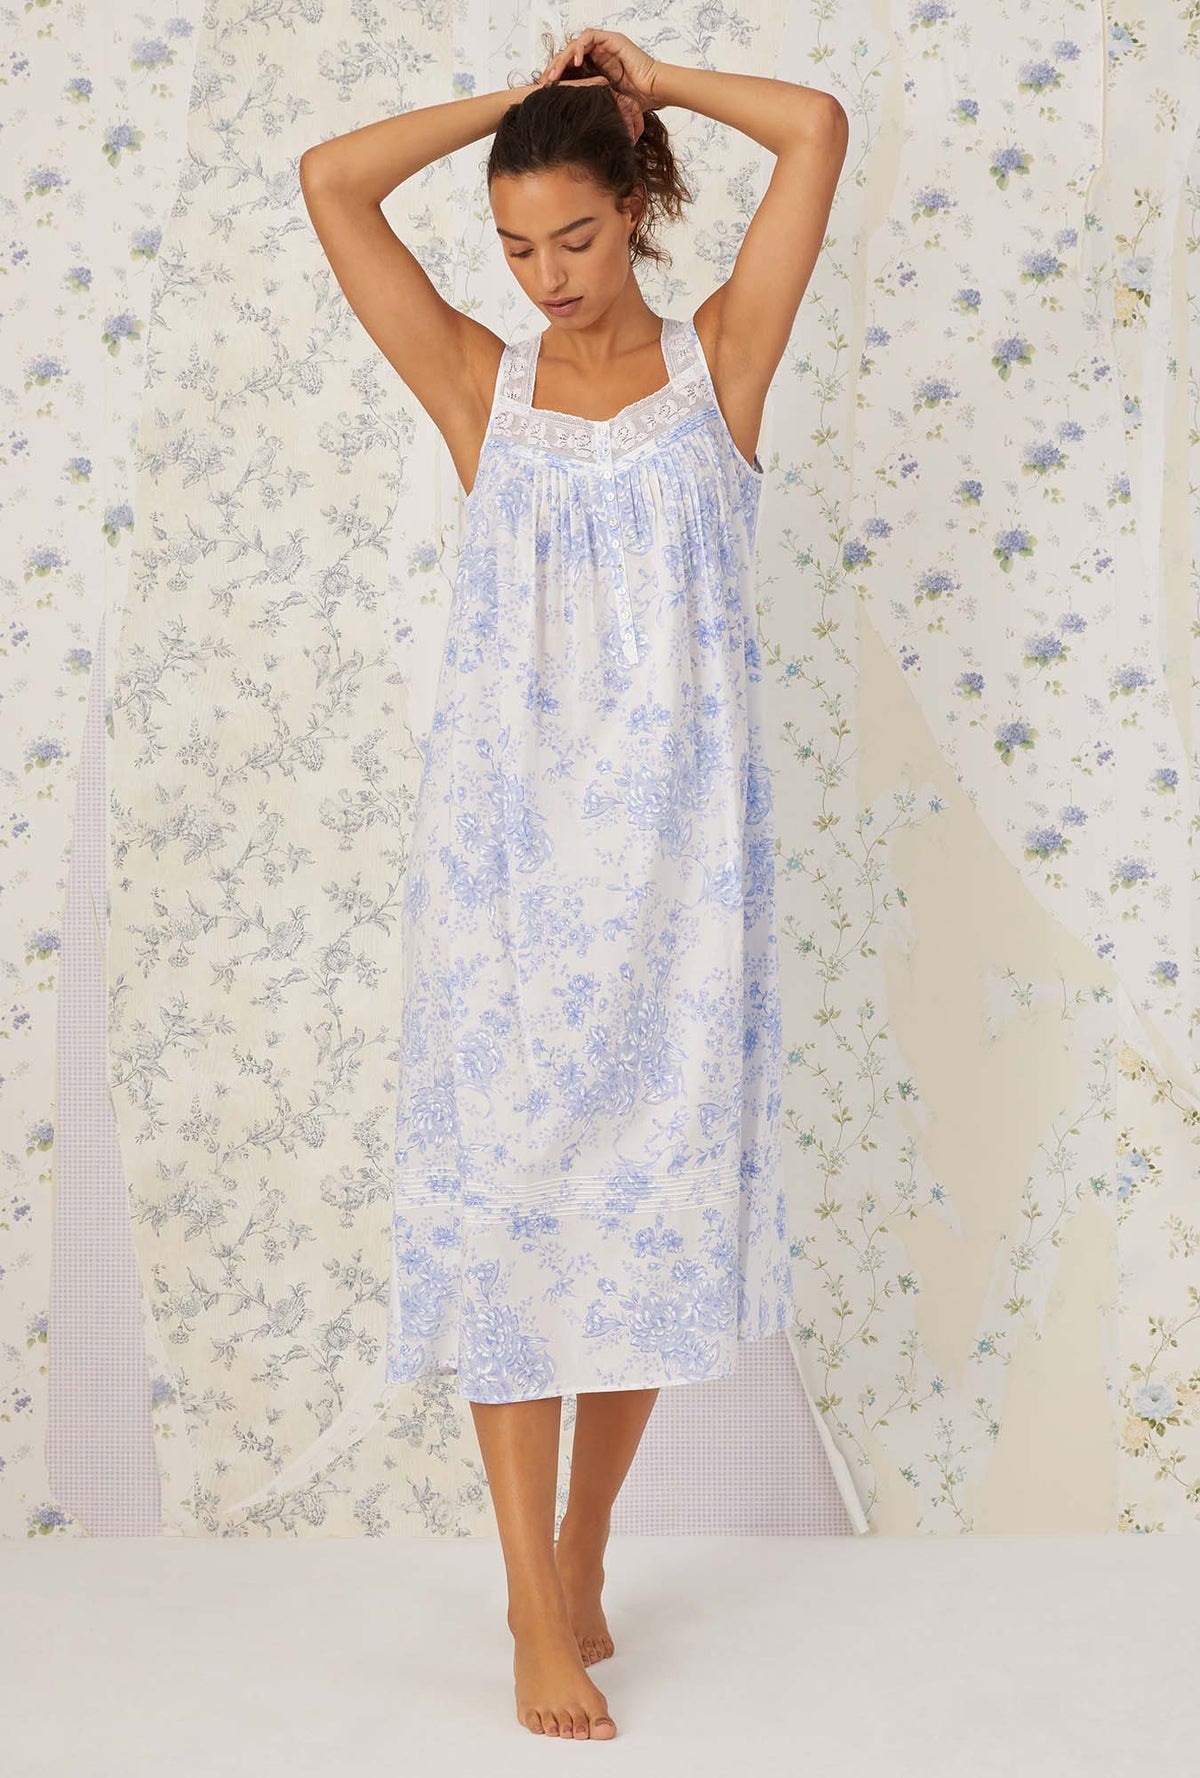 A lady wearing sleeveless blue china cotton eileen nightgown.